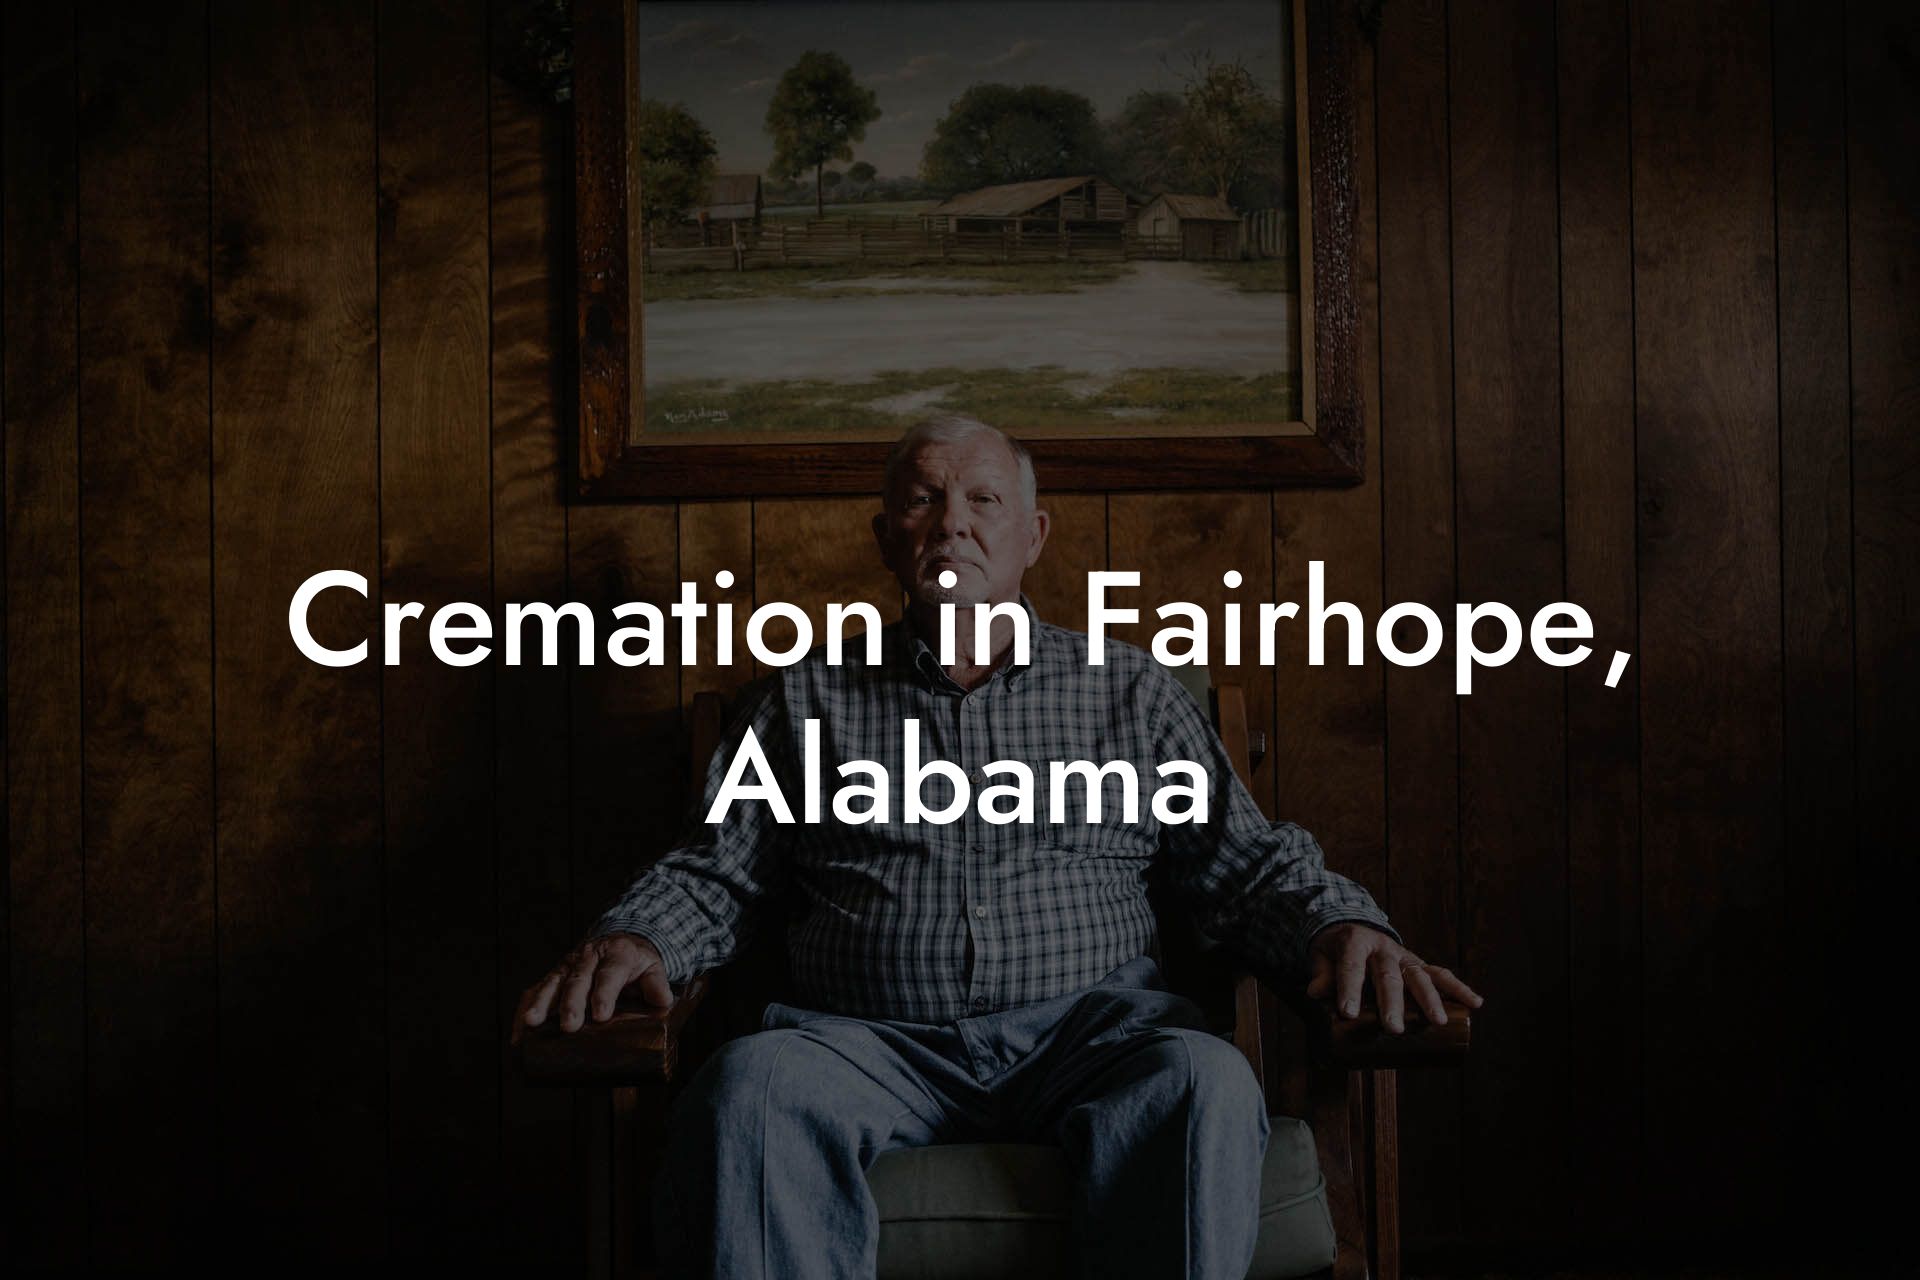 Cremation in Fairhope, Alabama